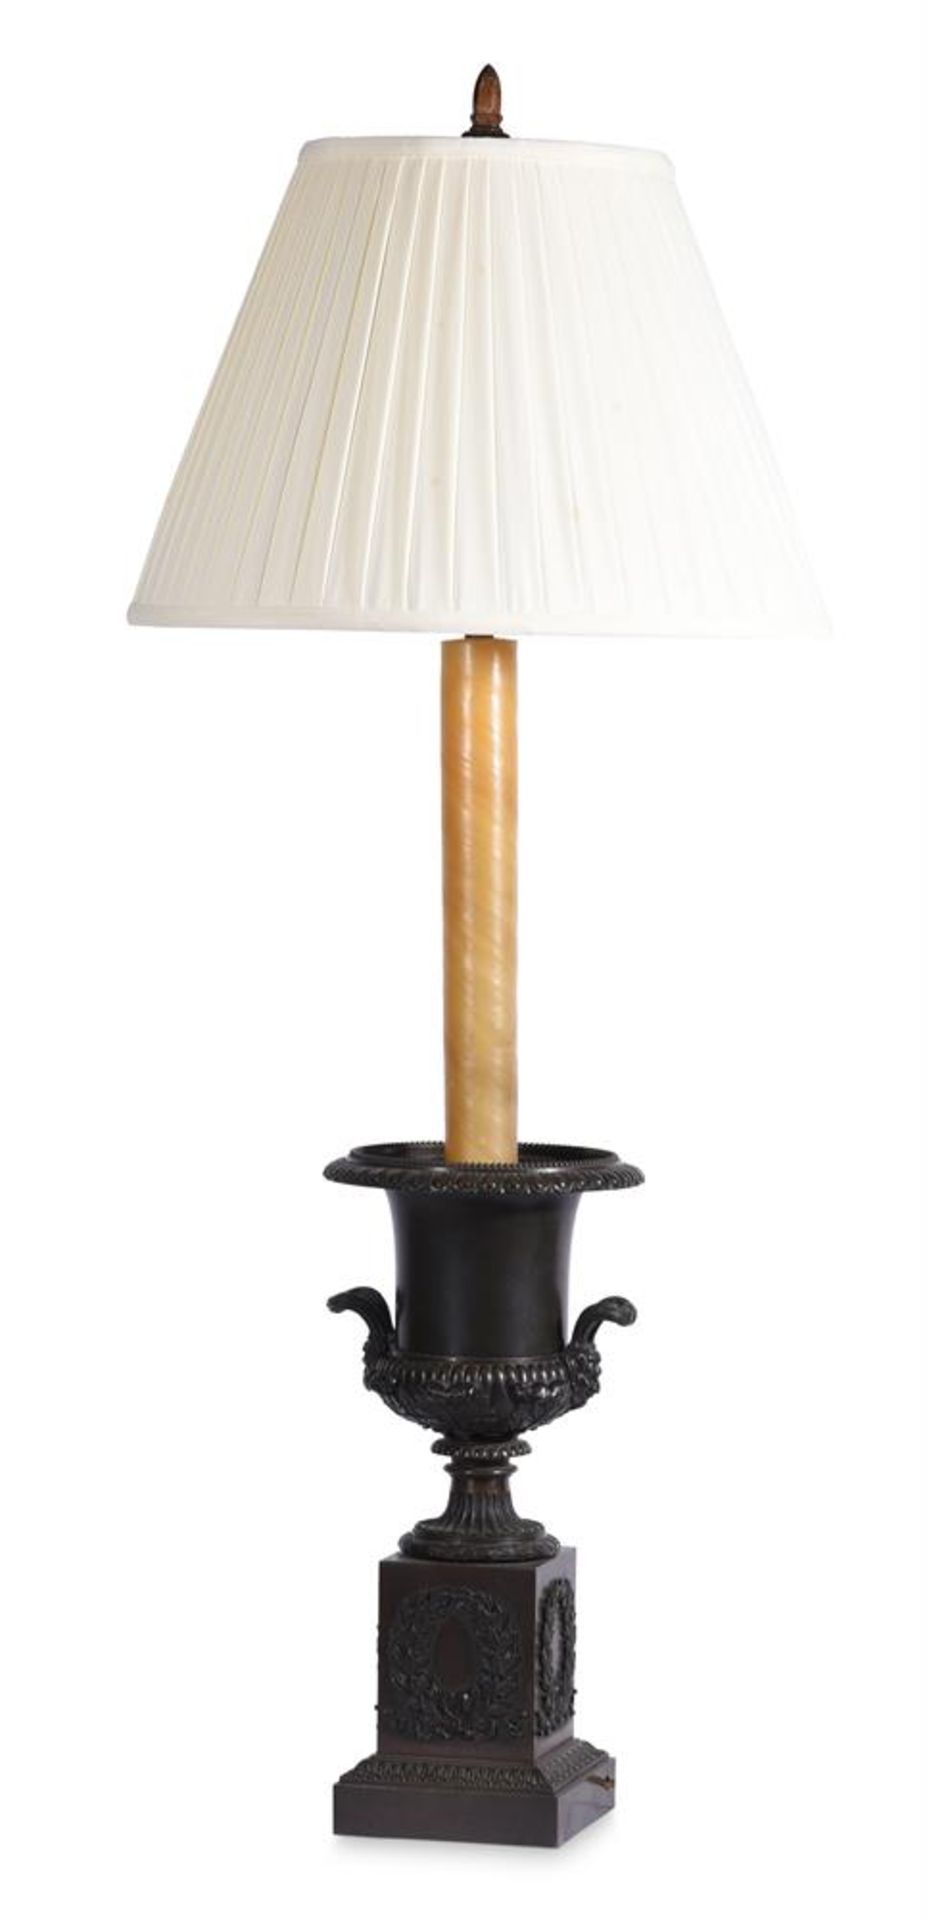 A BRONZED METAL CLASSICAL URN SHAPED LAMP BASE